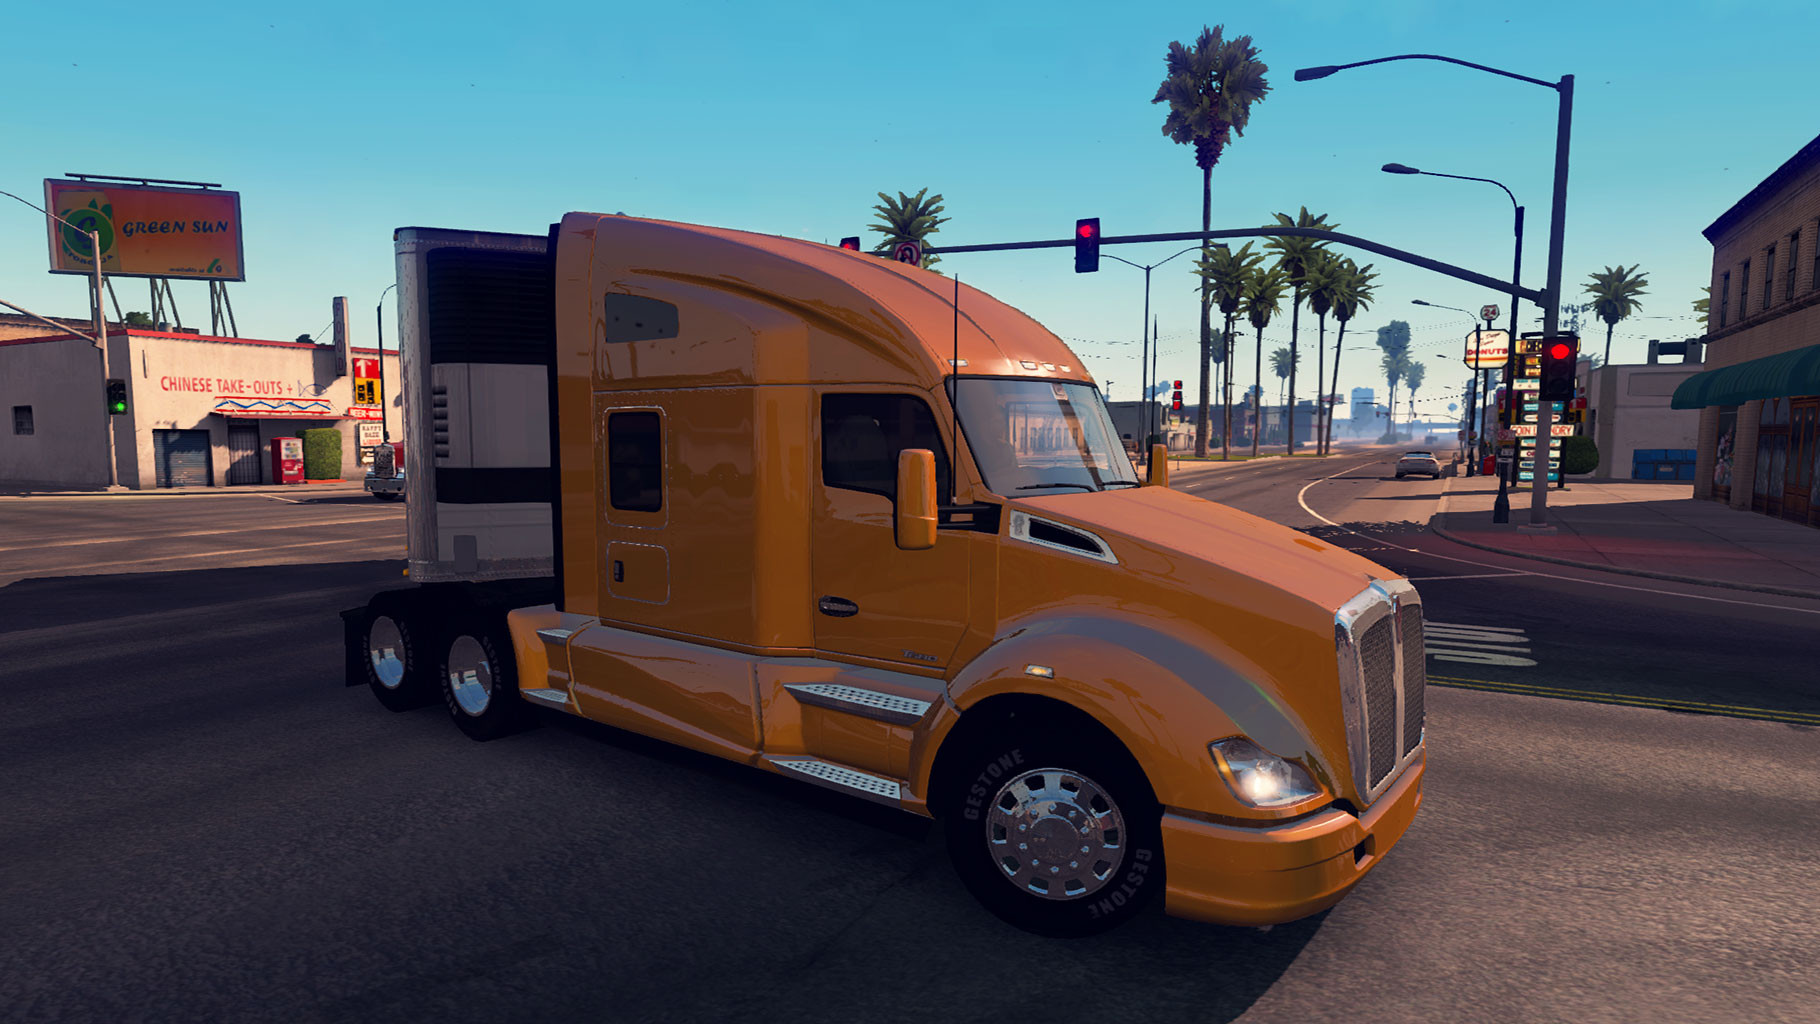 American Truck Simulator Steam Charts